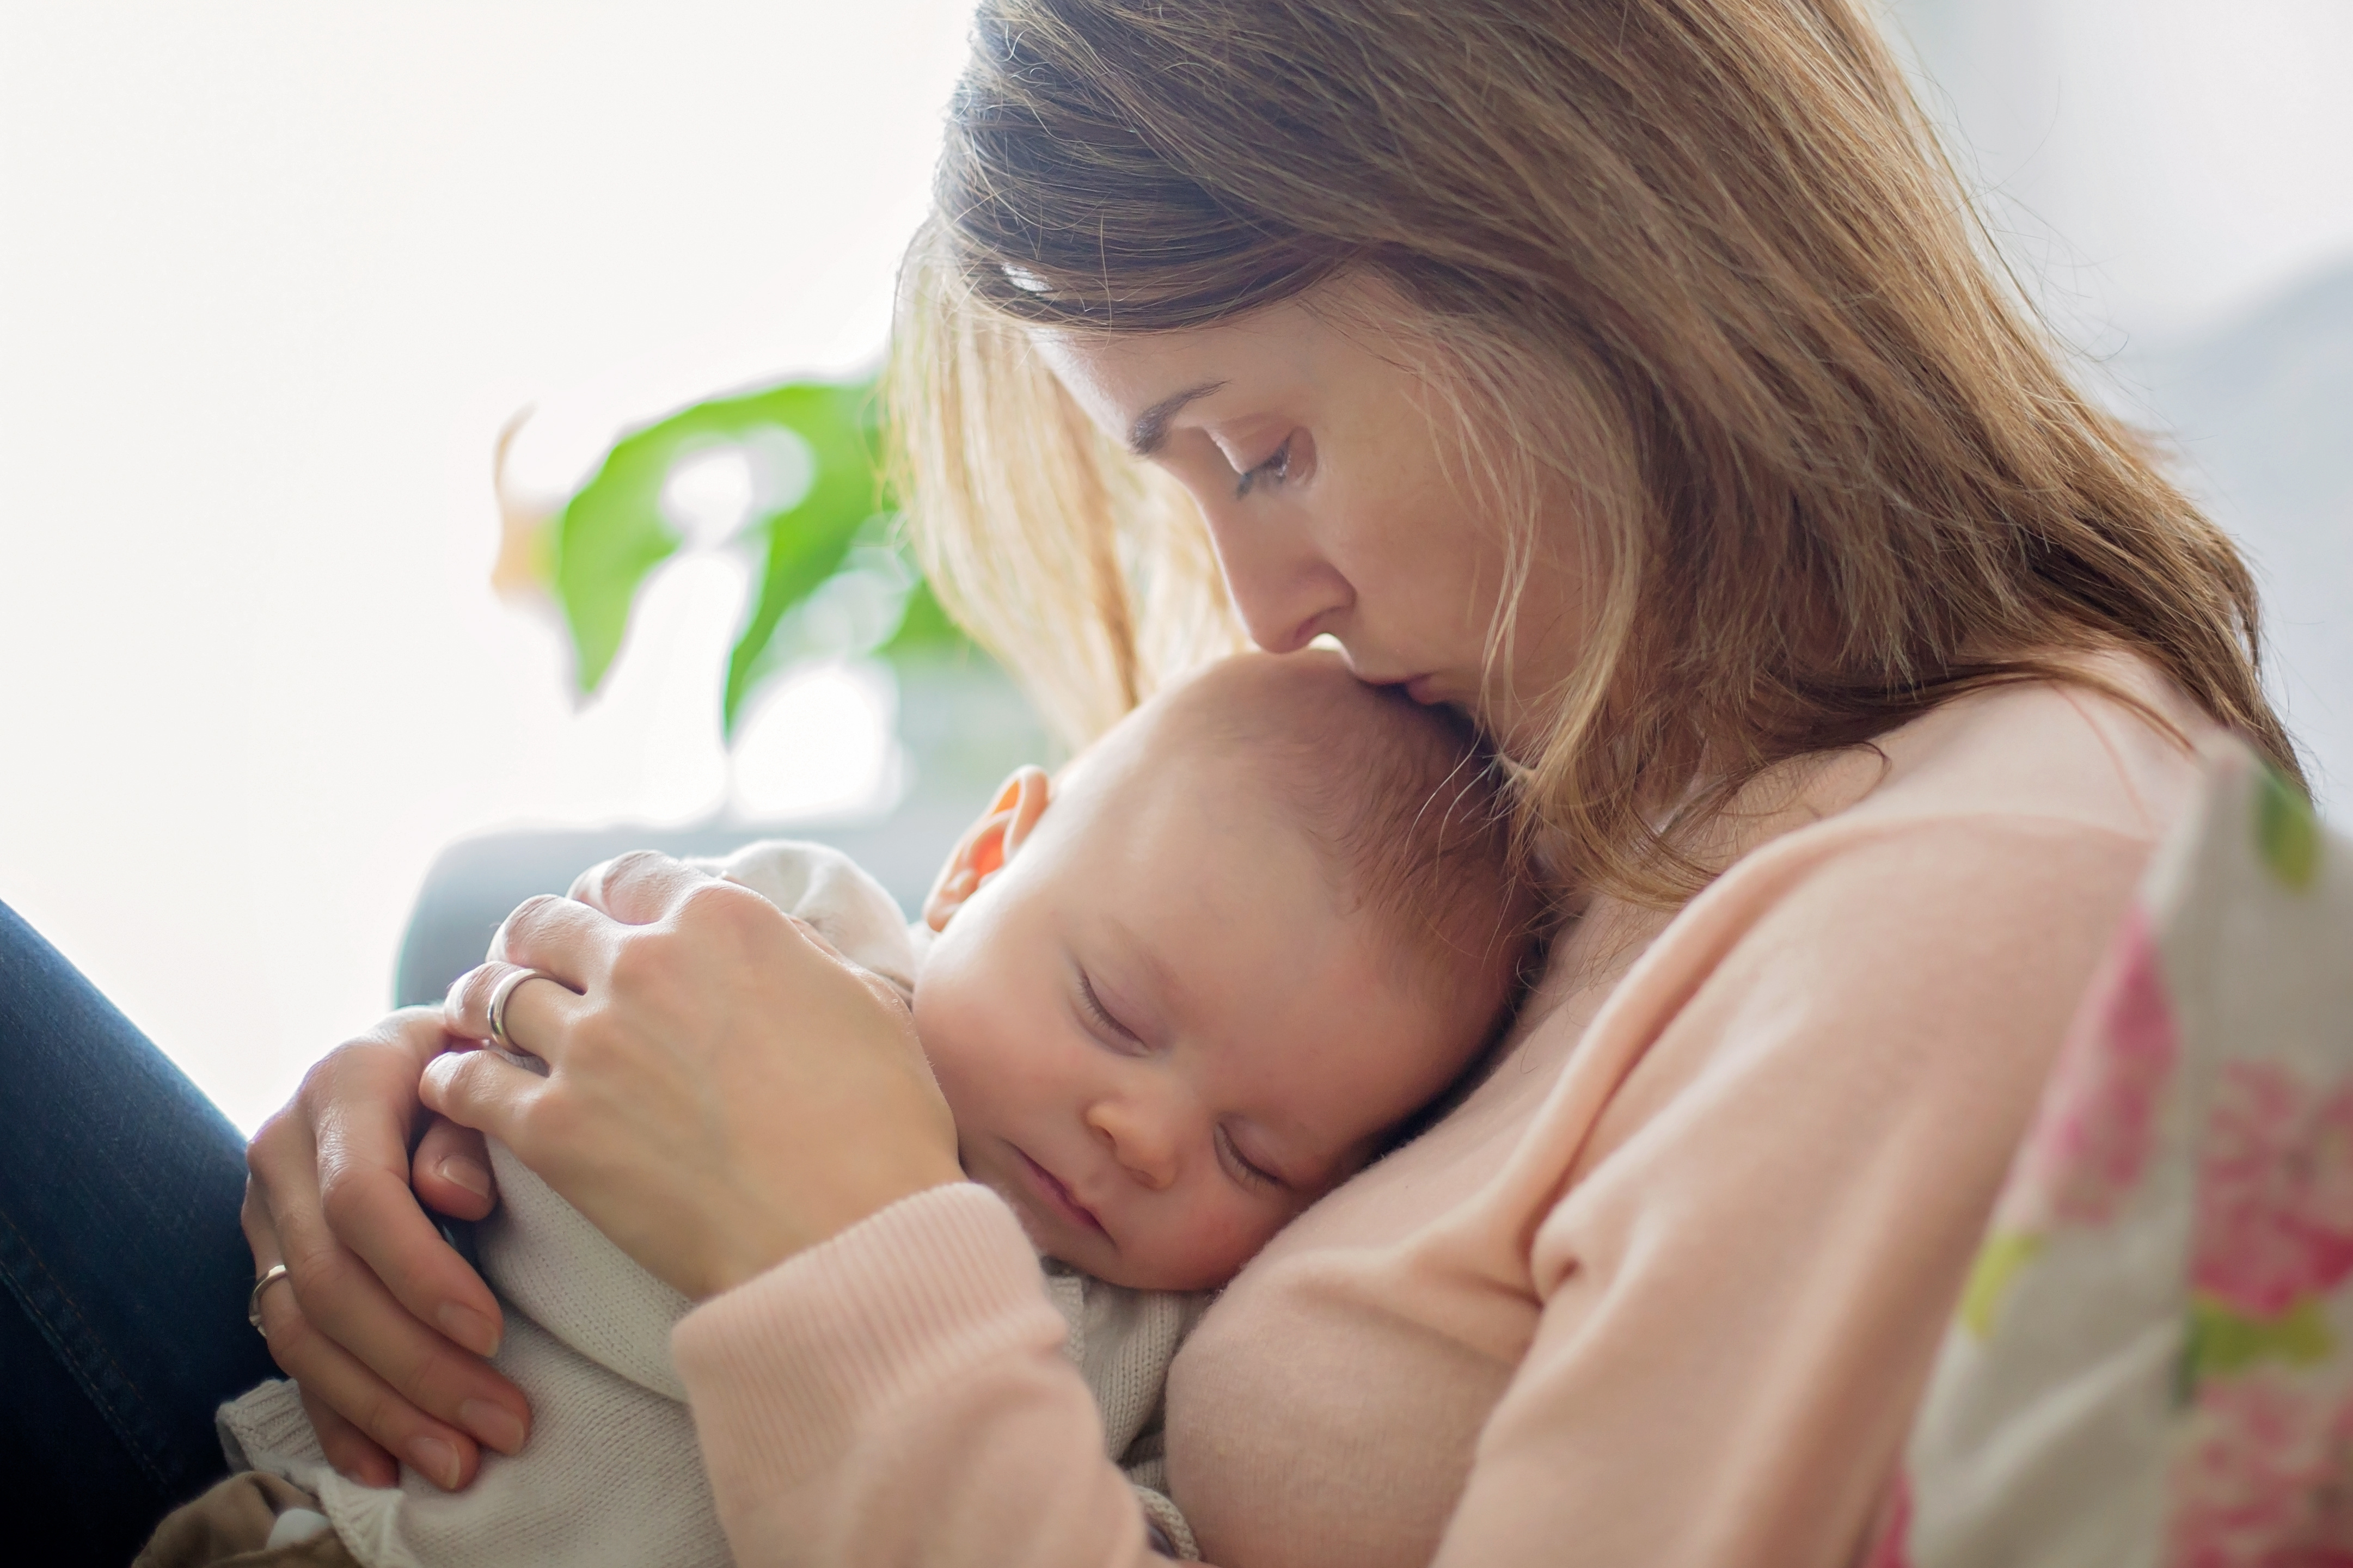 SE Texas ER & Hospital Announce Groundbreaking Postpartum Depression Treatment